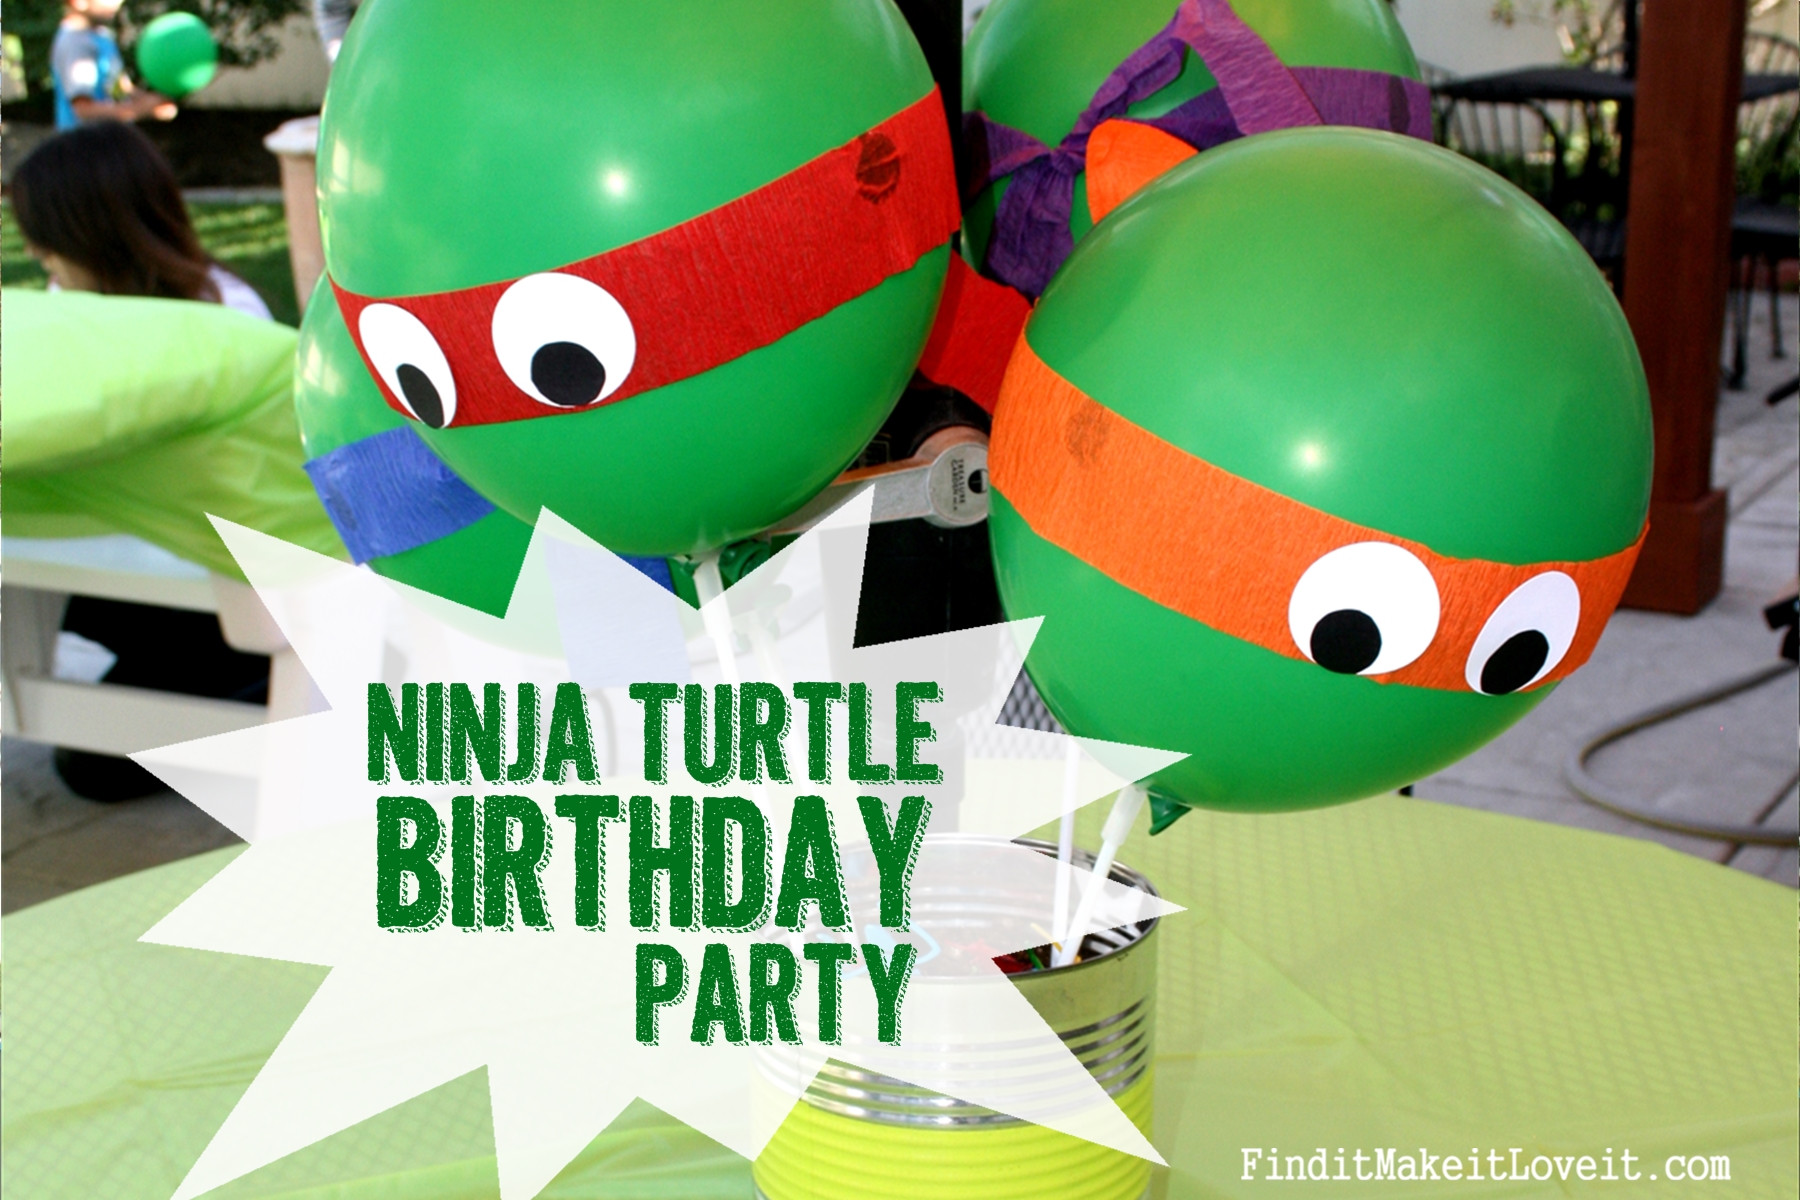 Best ideas about Ninja Turtle Birthday Decorations
. Save or Pin Teenage Mutant Ninja Turtle Birthday Party Now.